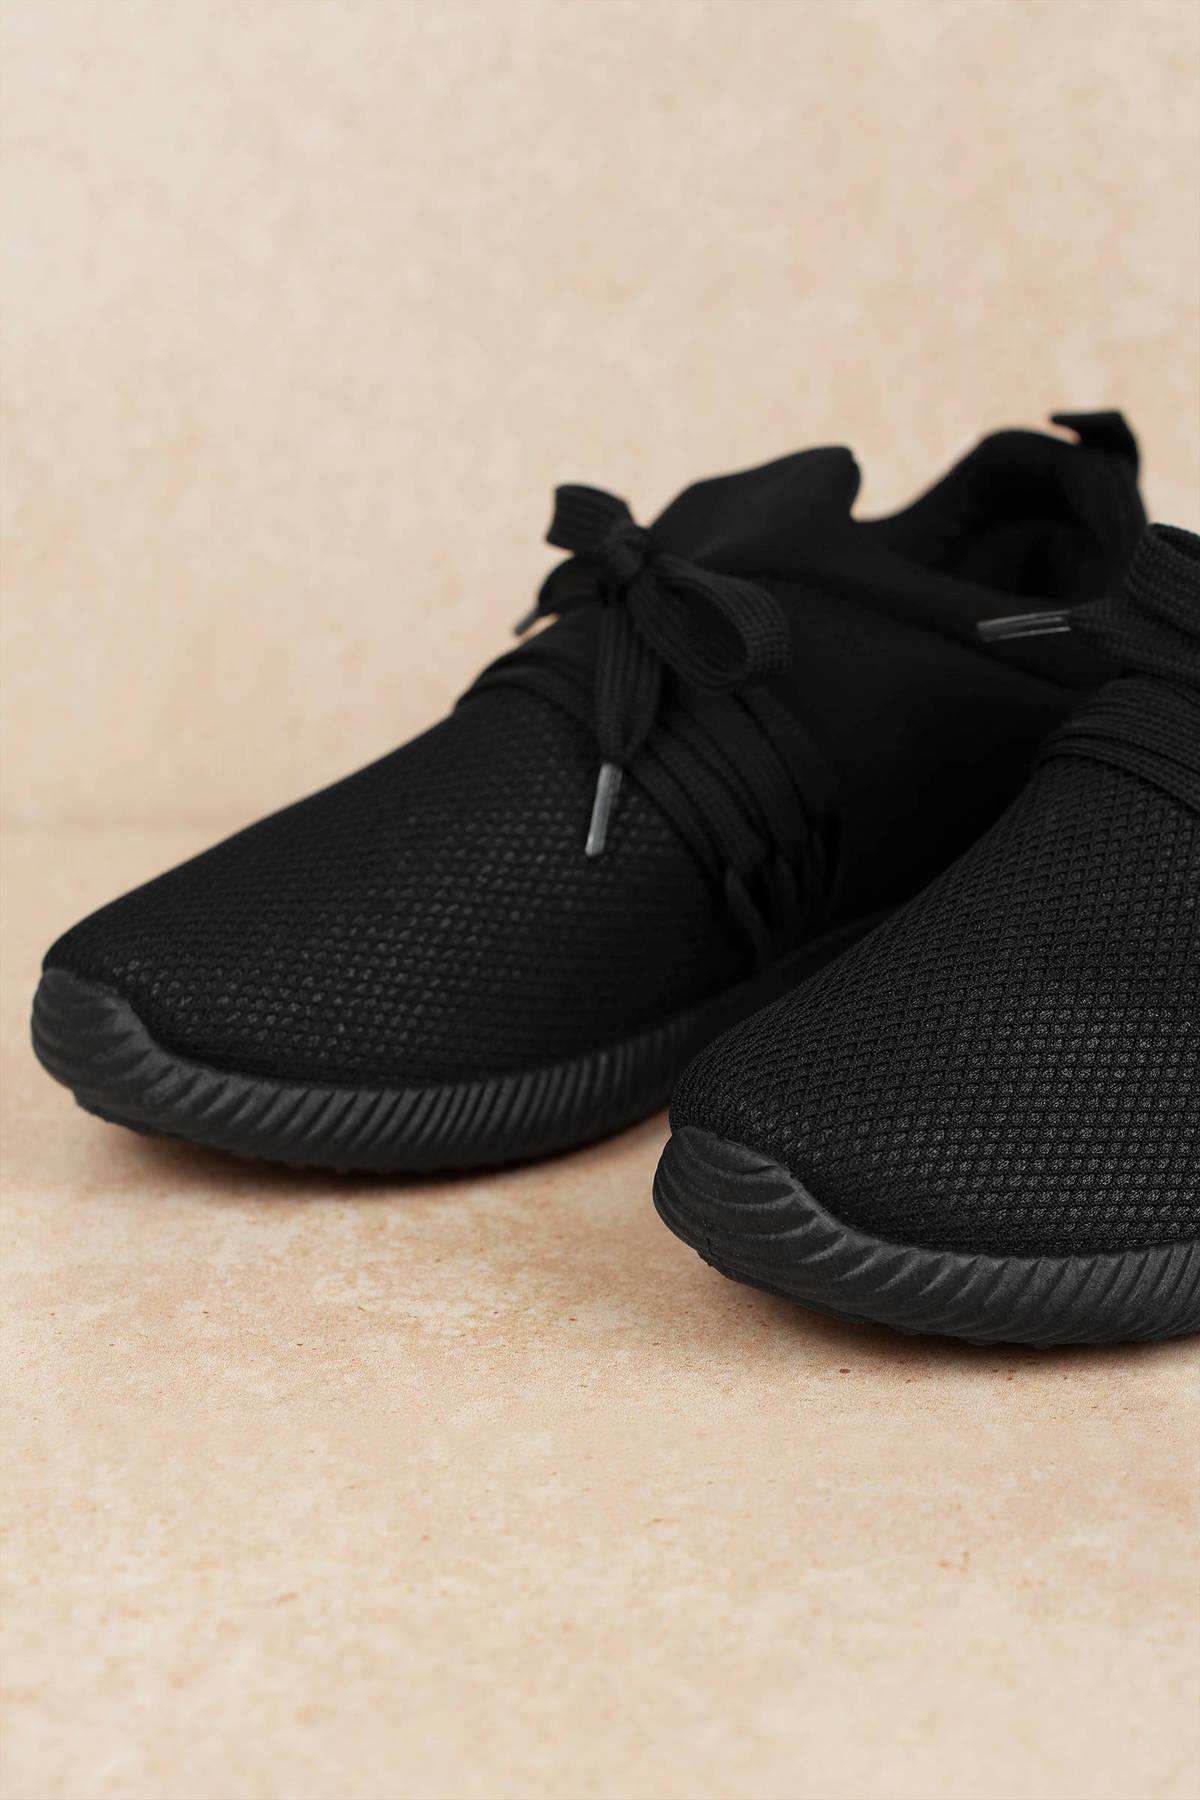 Black Sneakers - Knit Sneakers - Black Trendy Athletic Shoes